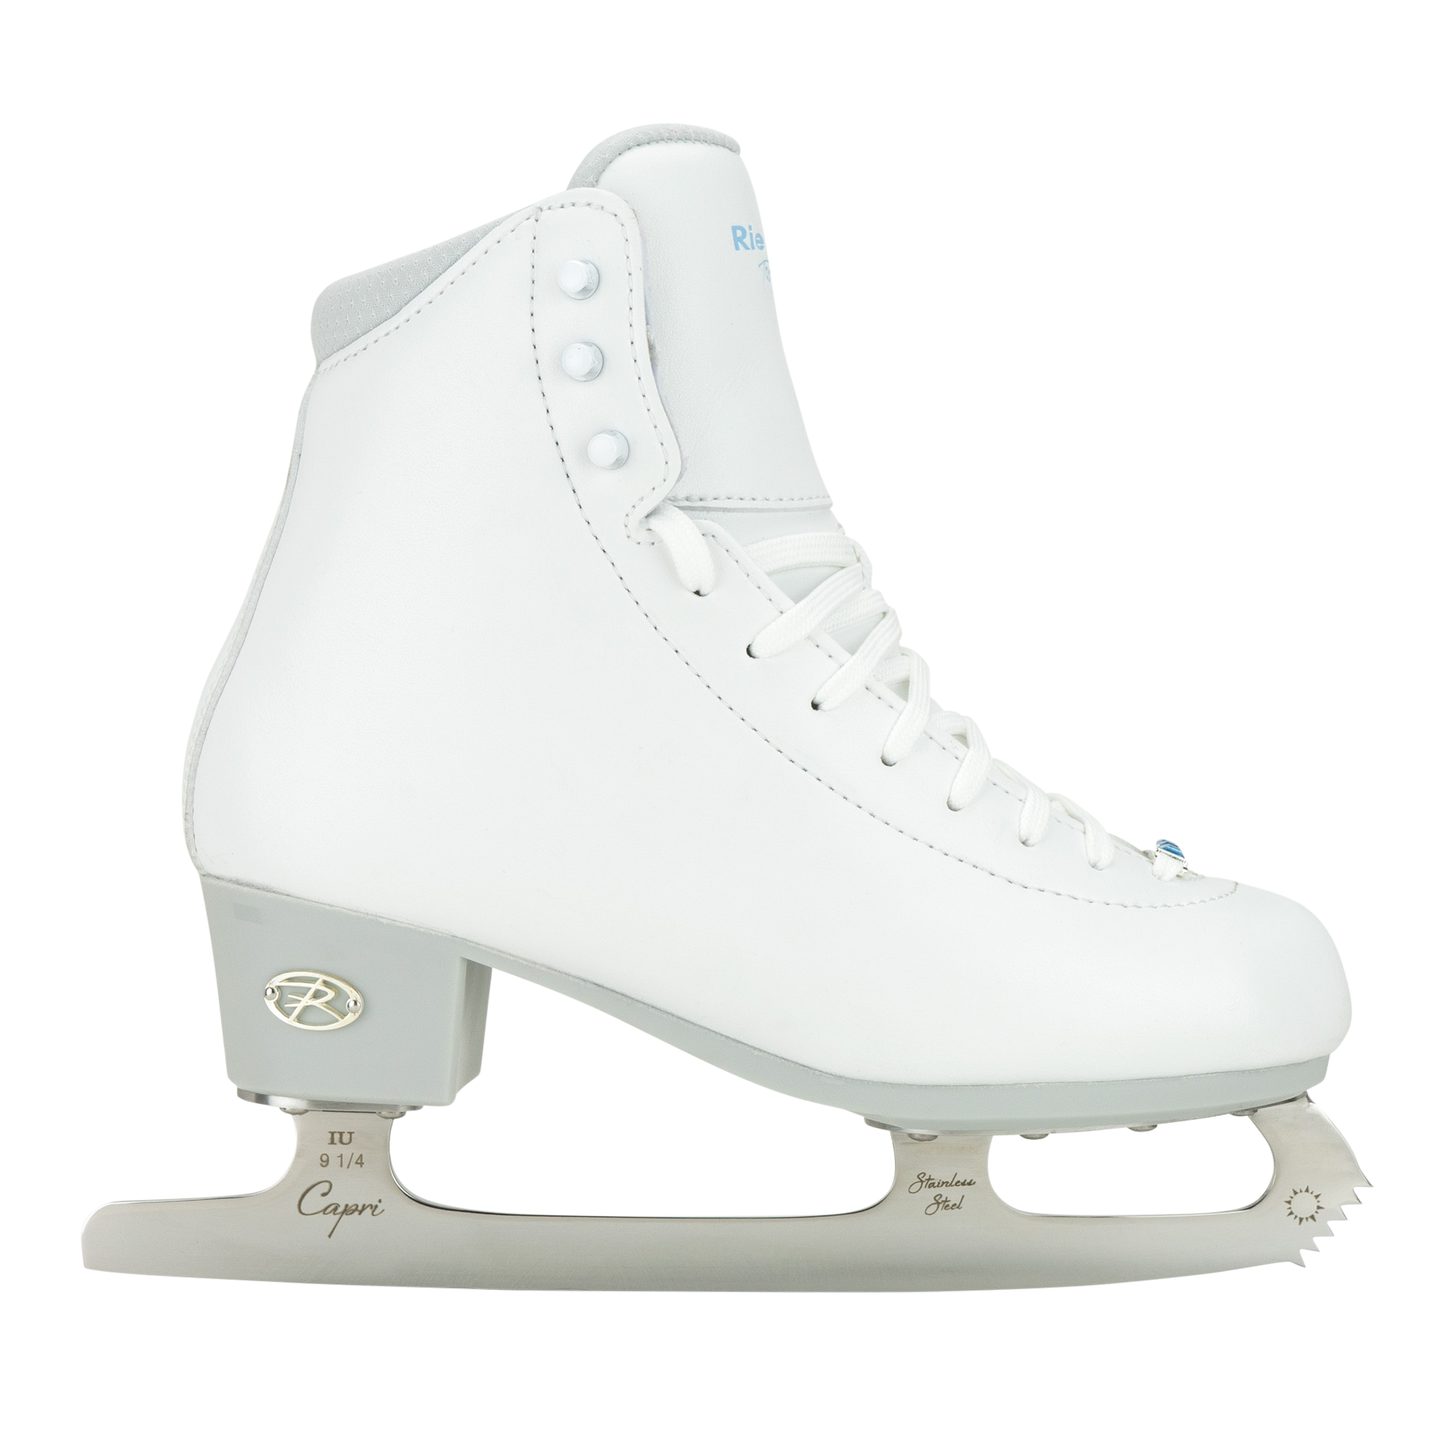 Riedell White Topaz Ice Figure Skating Skate